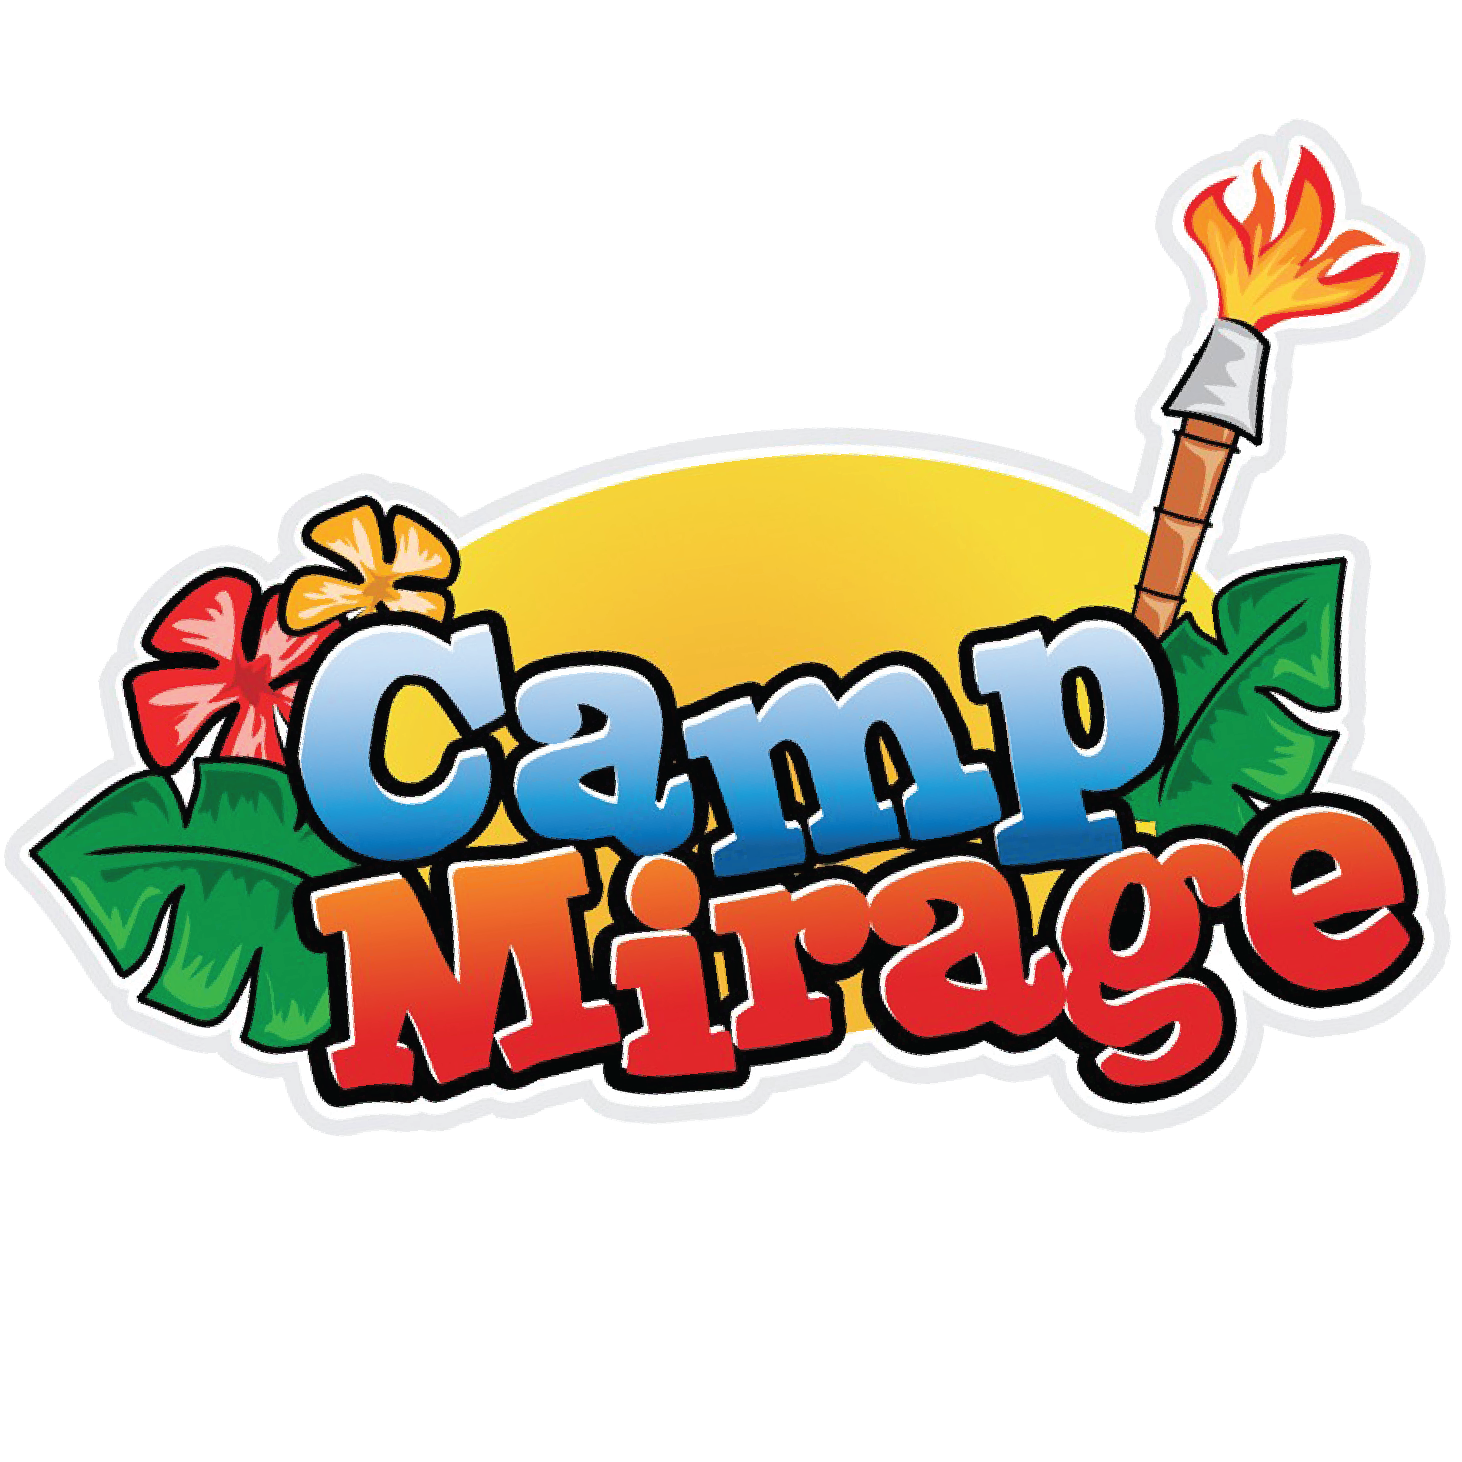 Camp mirage the coolest. Youtube clipart rocket league